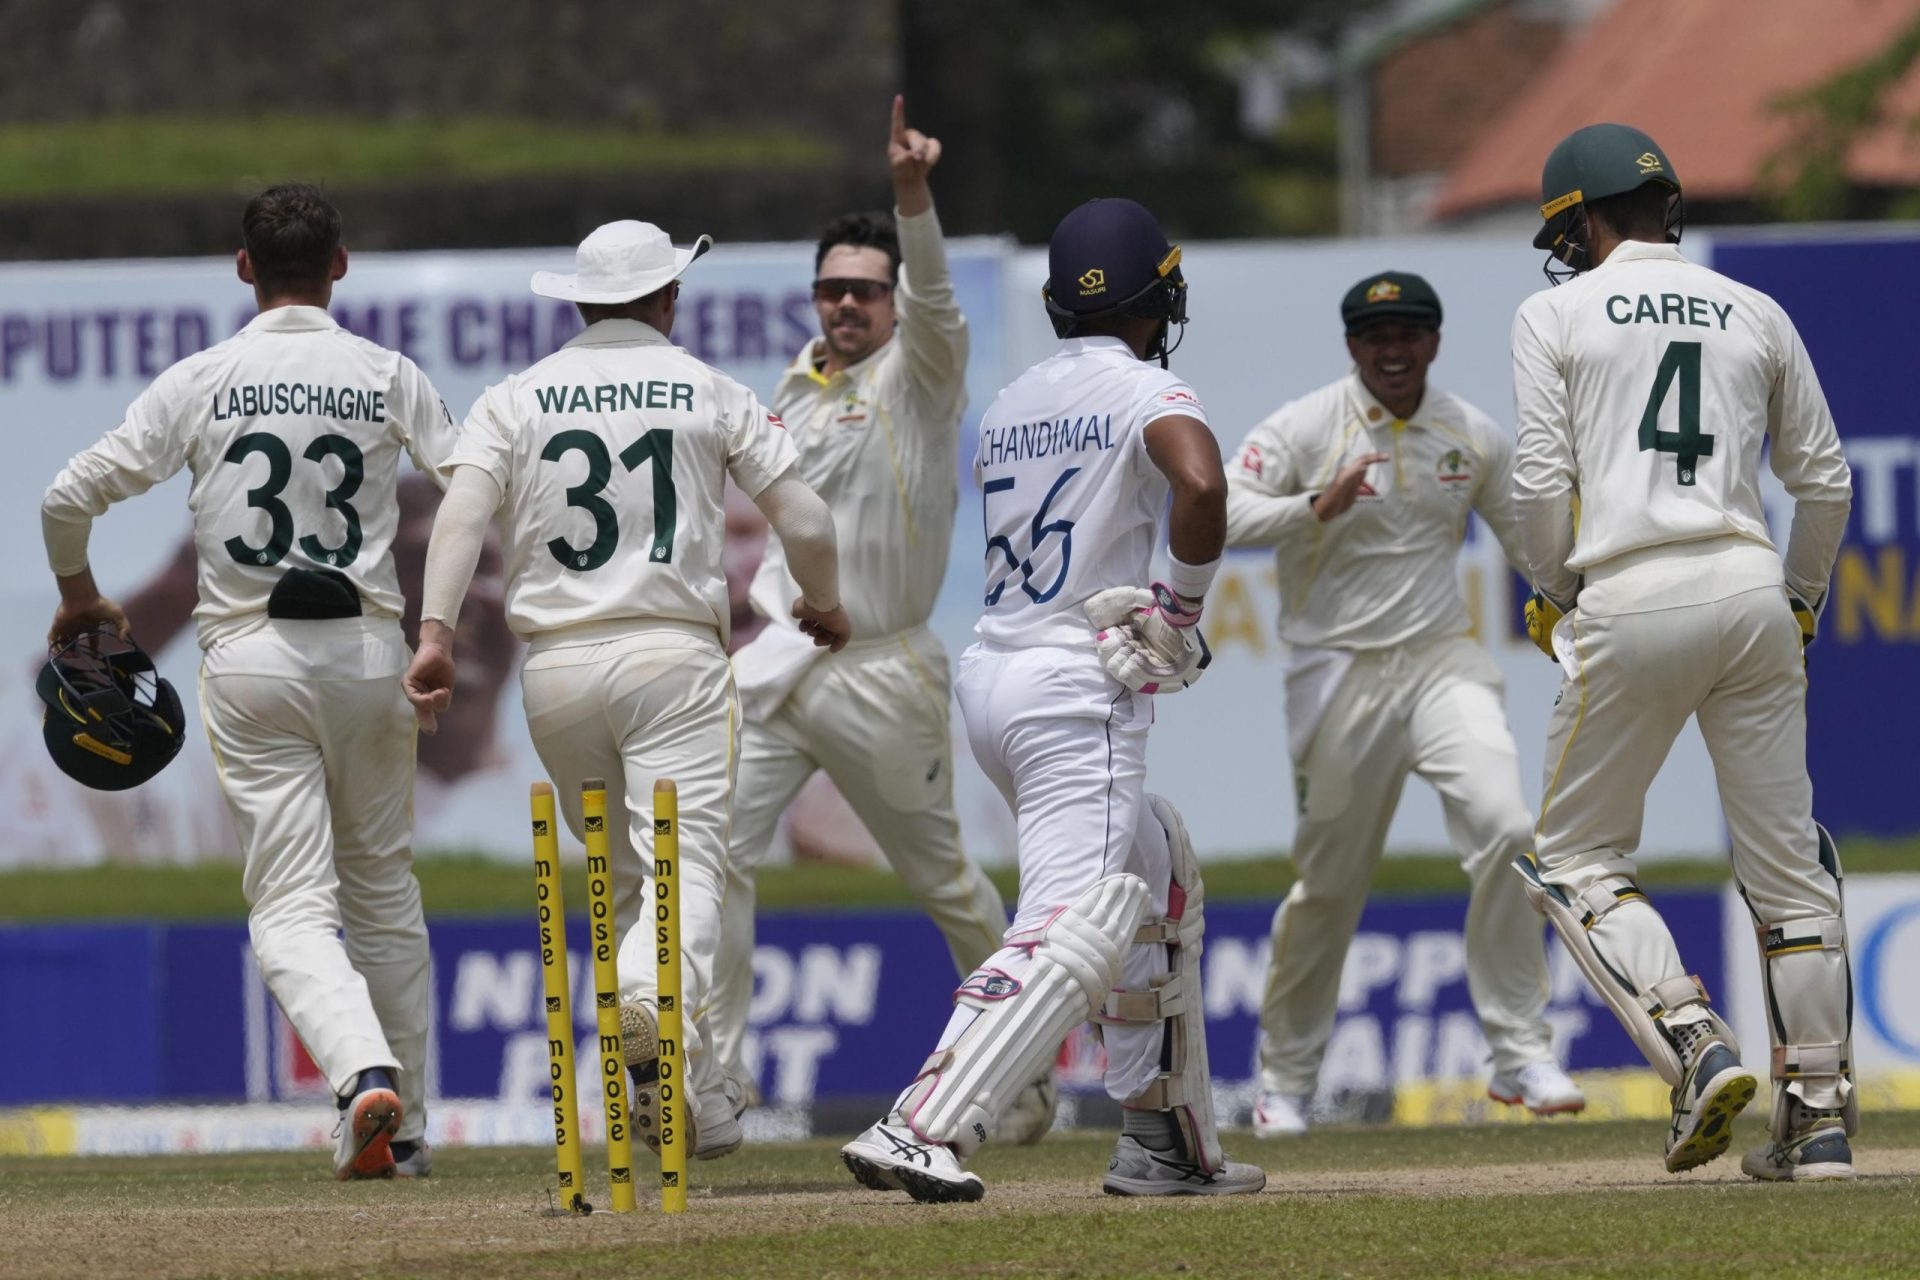 Australia hace girar a Sri Lanka para ganar la primera prueba por 10 wickets